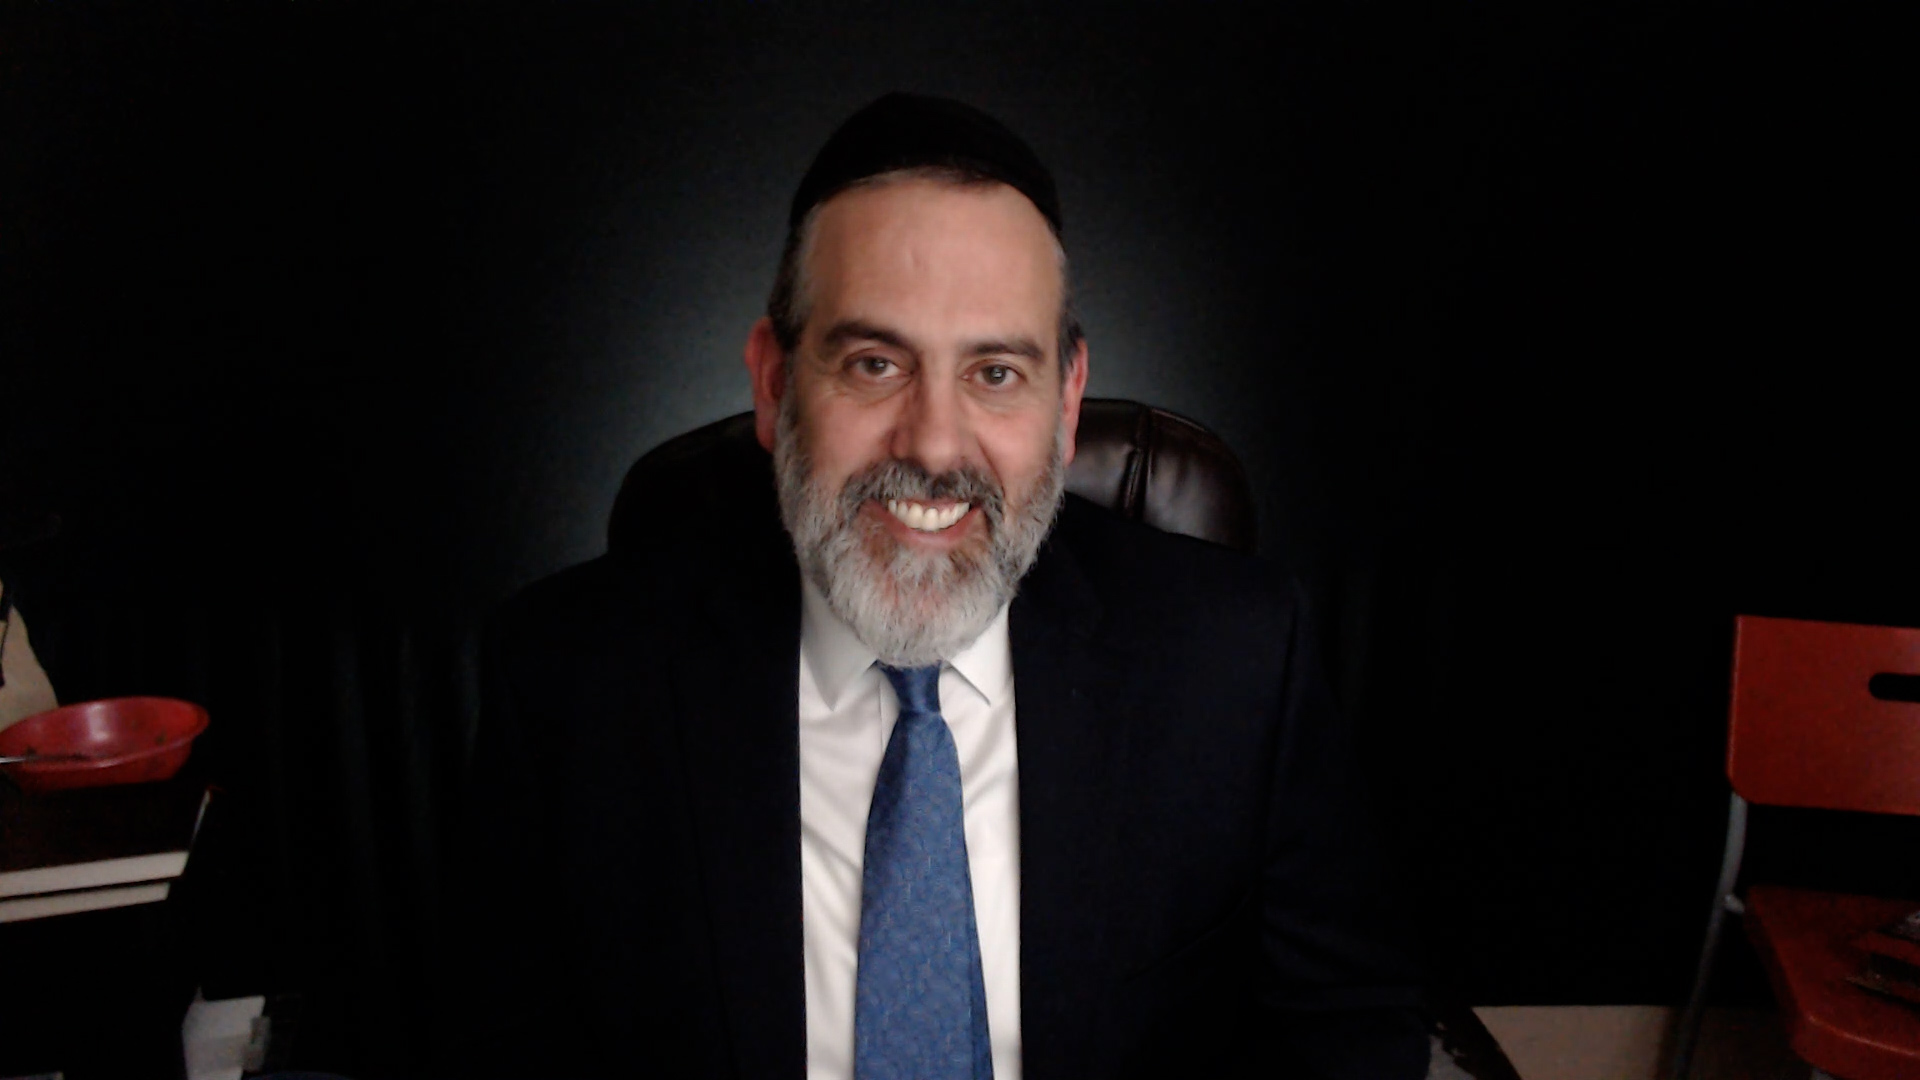 WATCH: A Conversation With Rabbi Avraham Goldhar